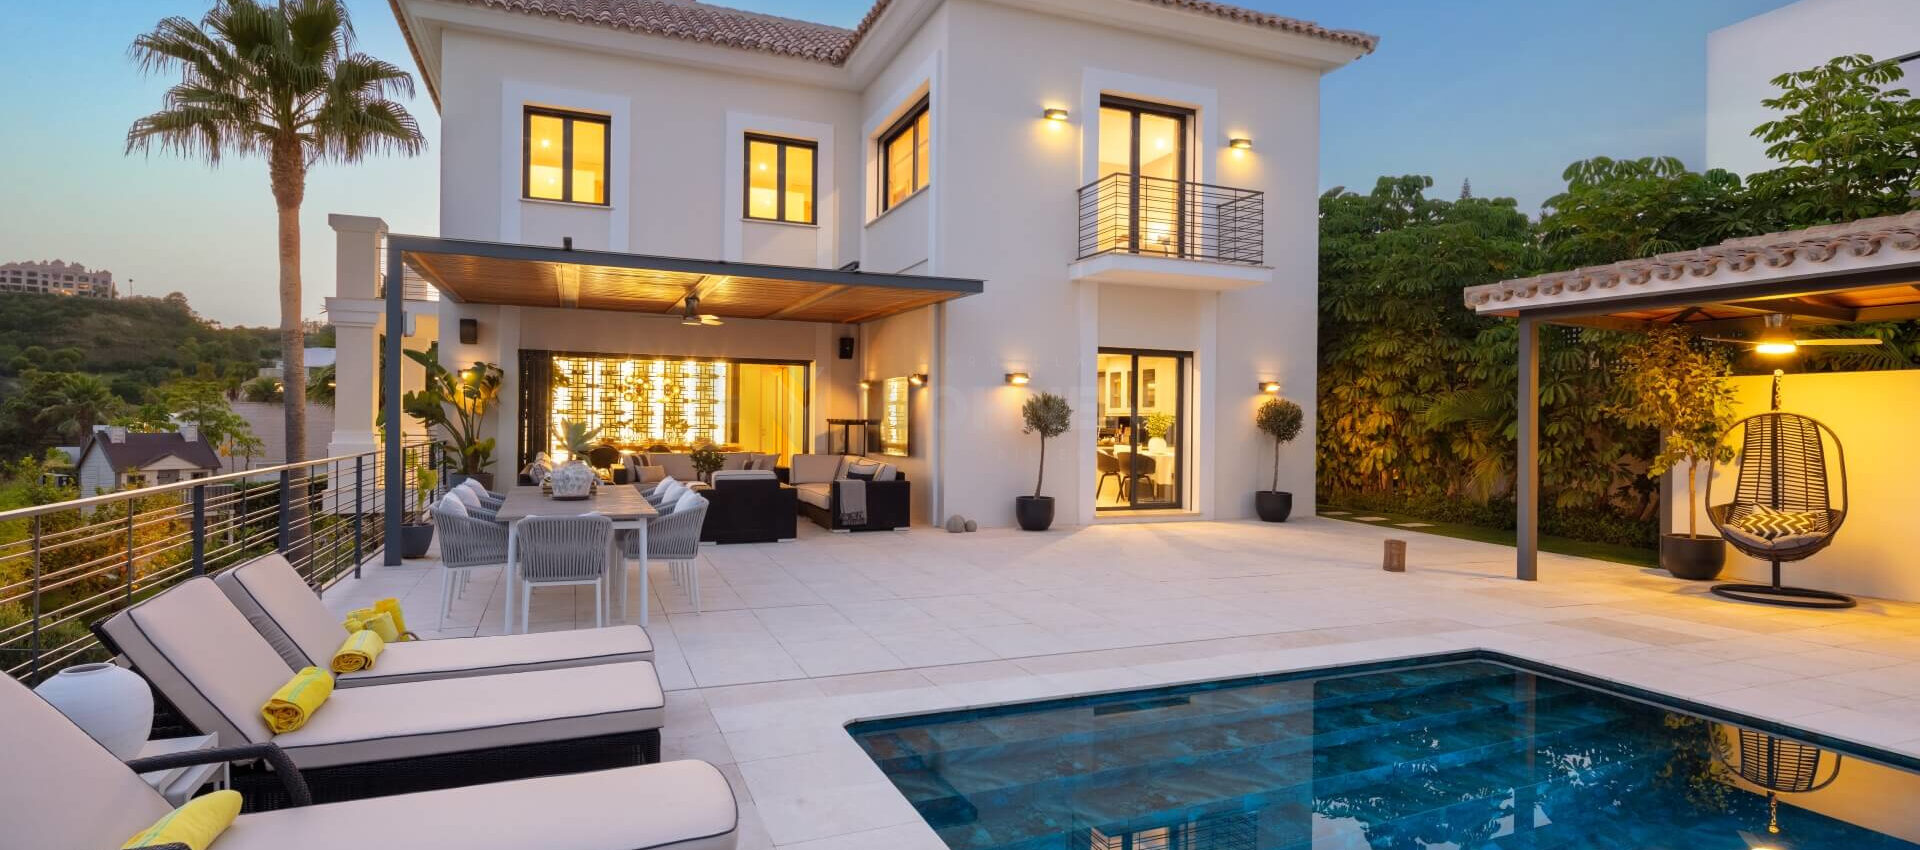 Superb contemporary villa with panoramic views to Marbella’s coastline